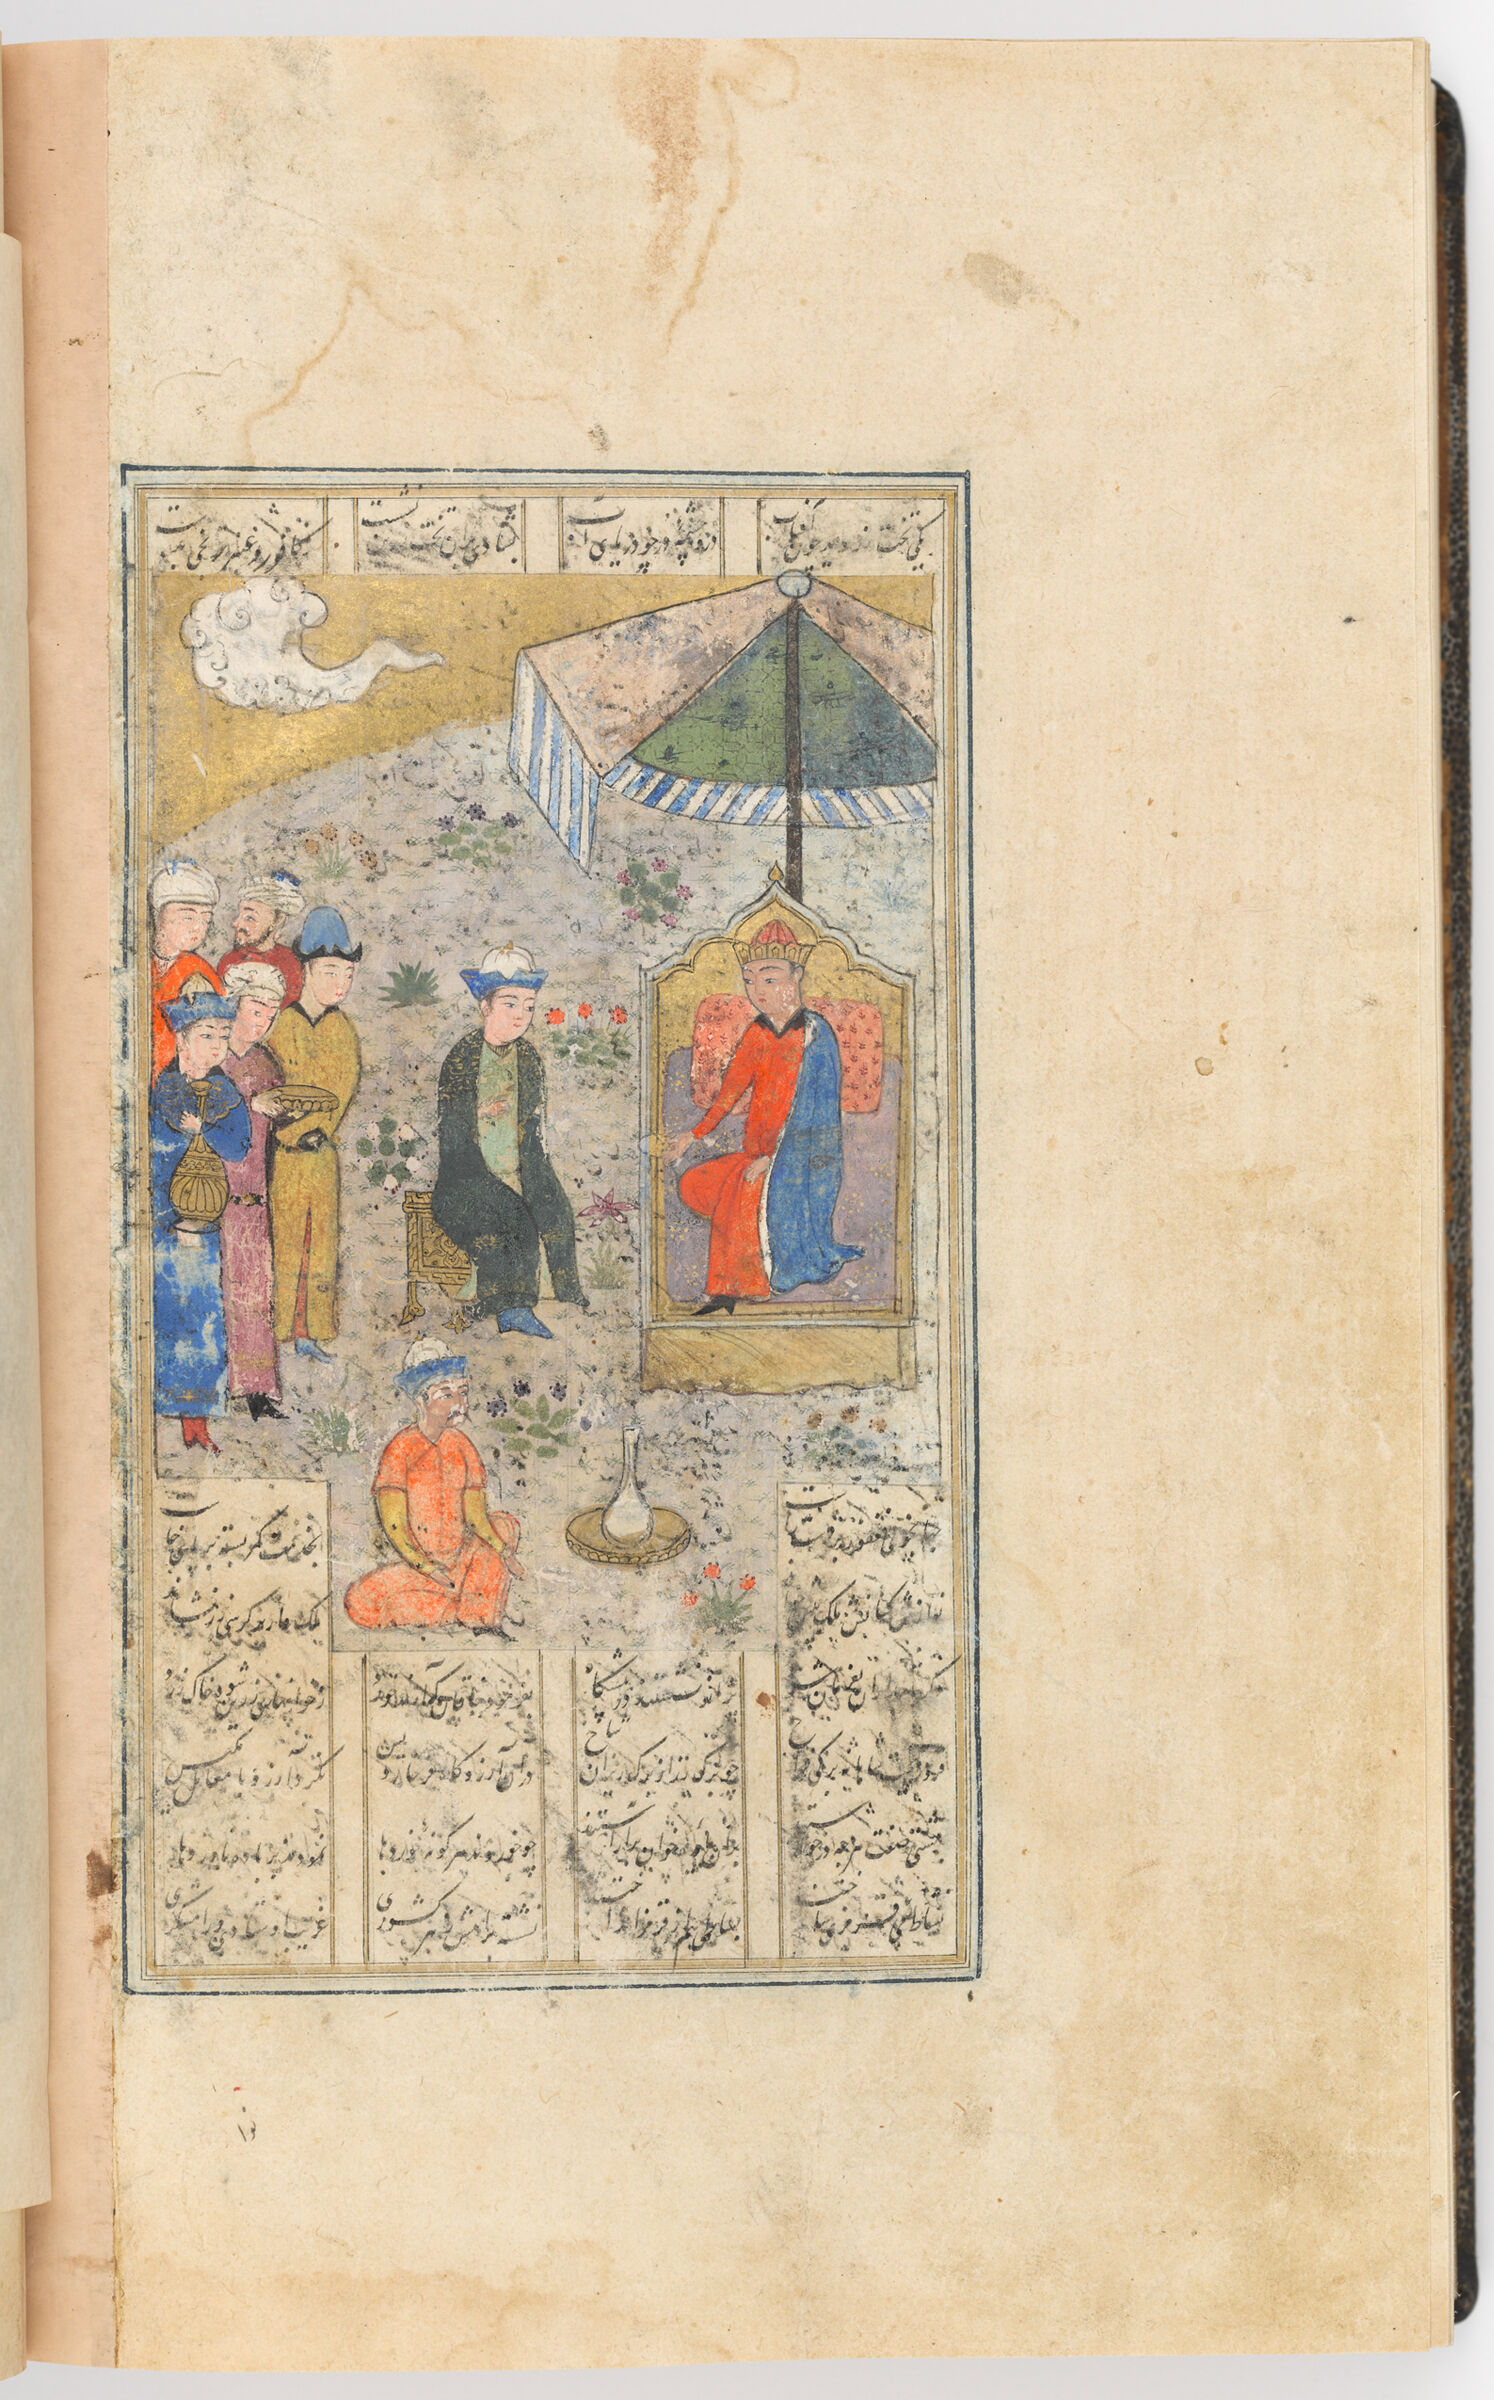 Khaqan Of Chin Invites Iskandar (Text Recto; Painting Verso Of Folio 313), Painting From A Manuscript Of The Khamsa By Nizami